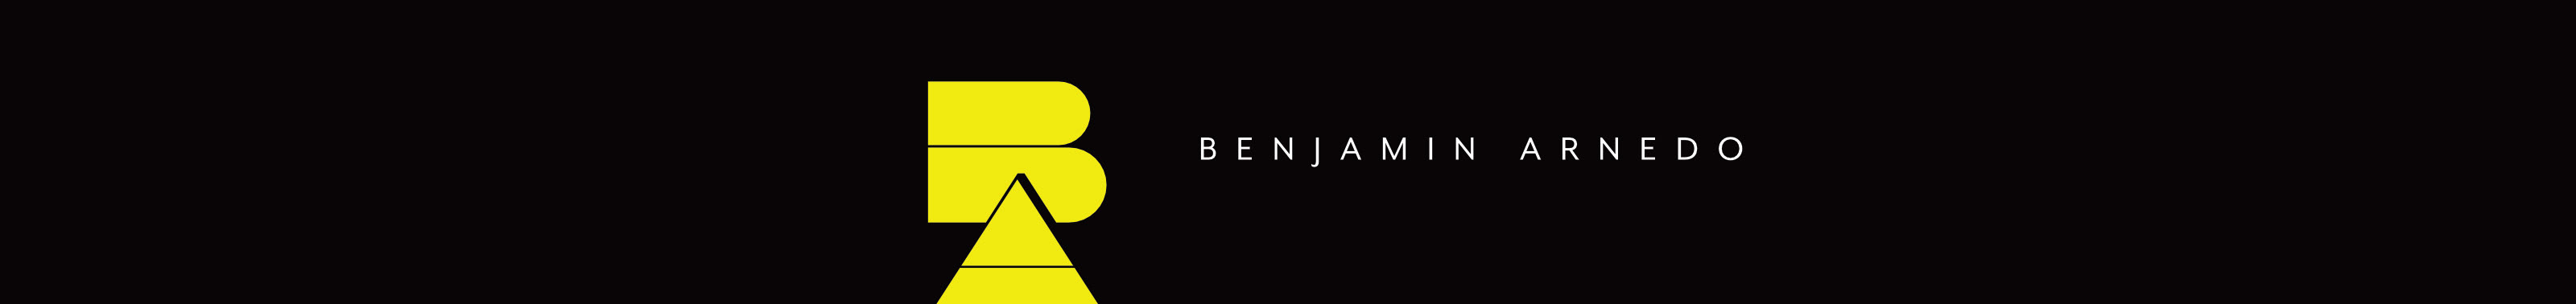 Benjamin Arnedo's profile banner